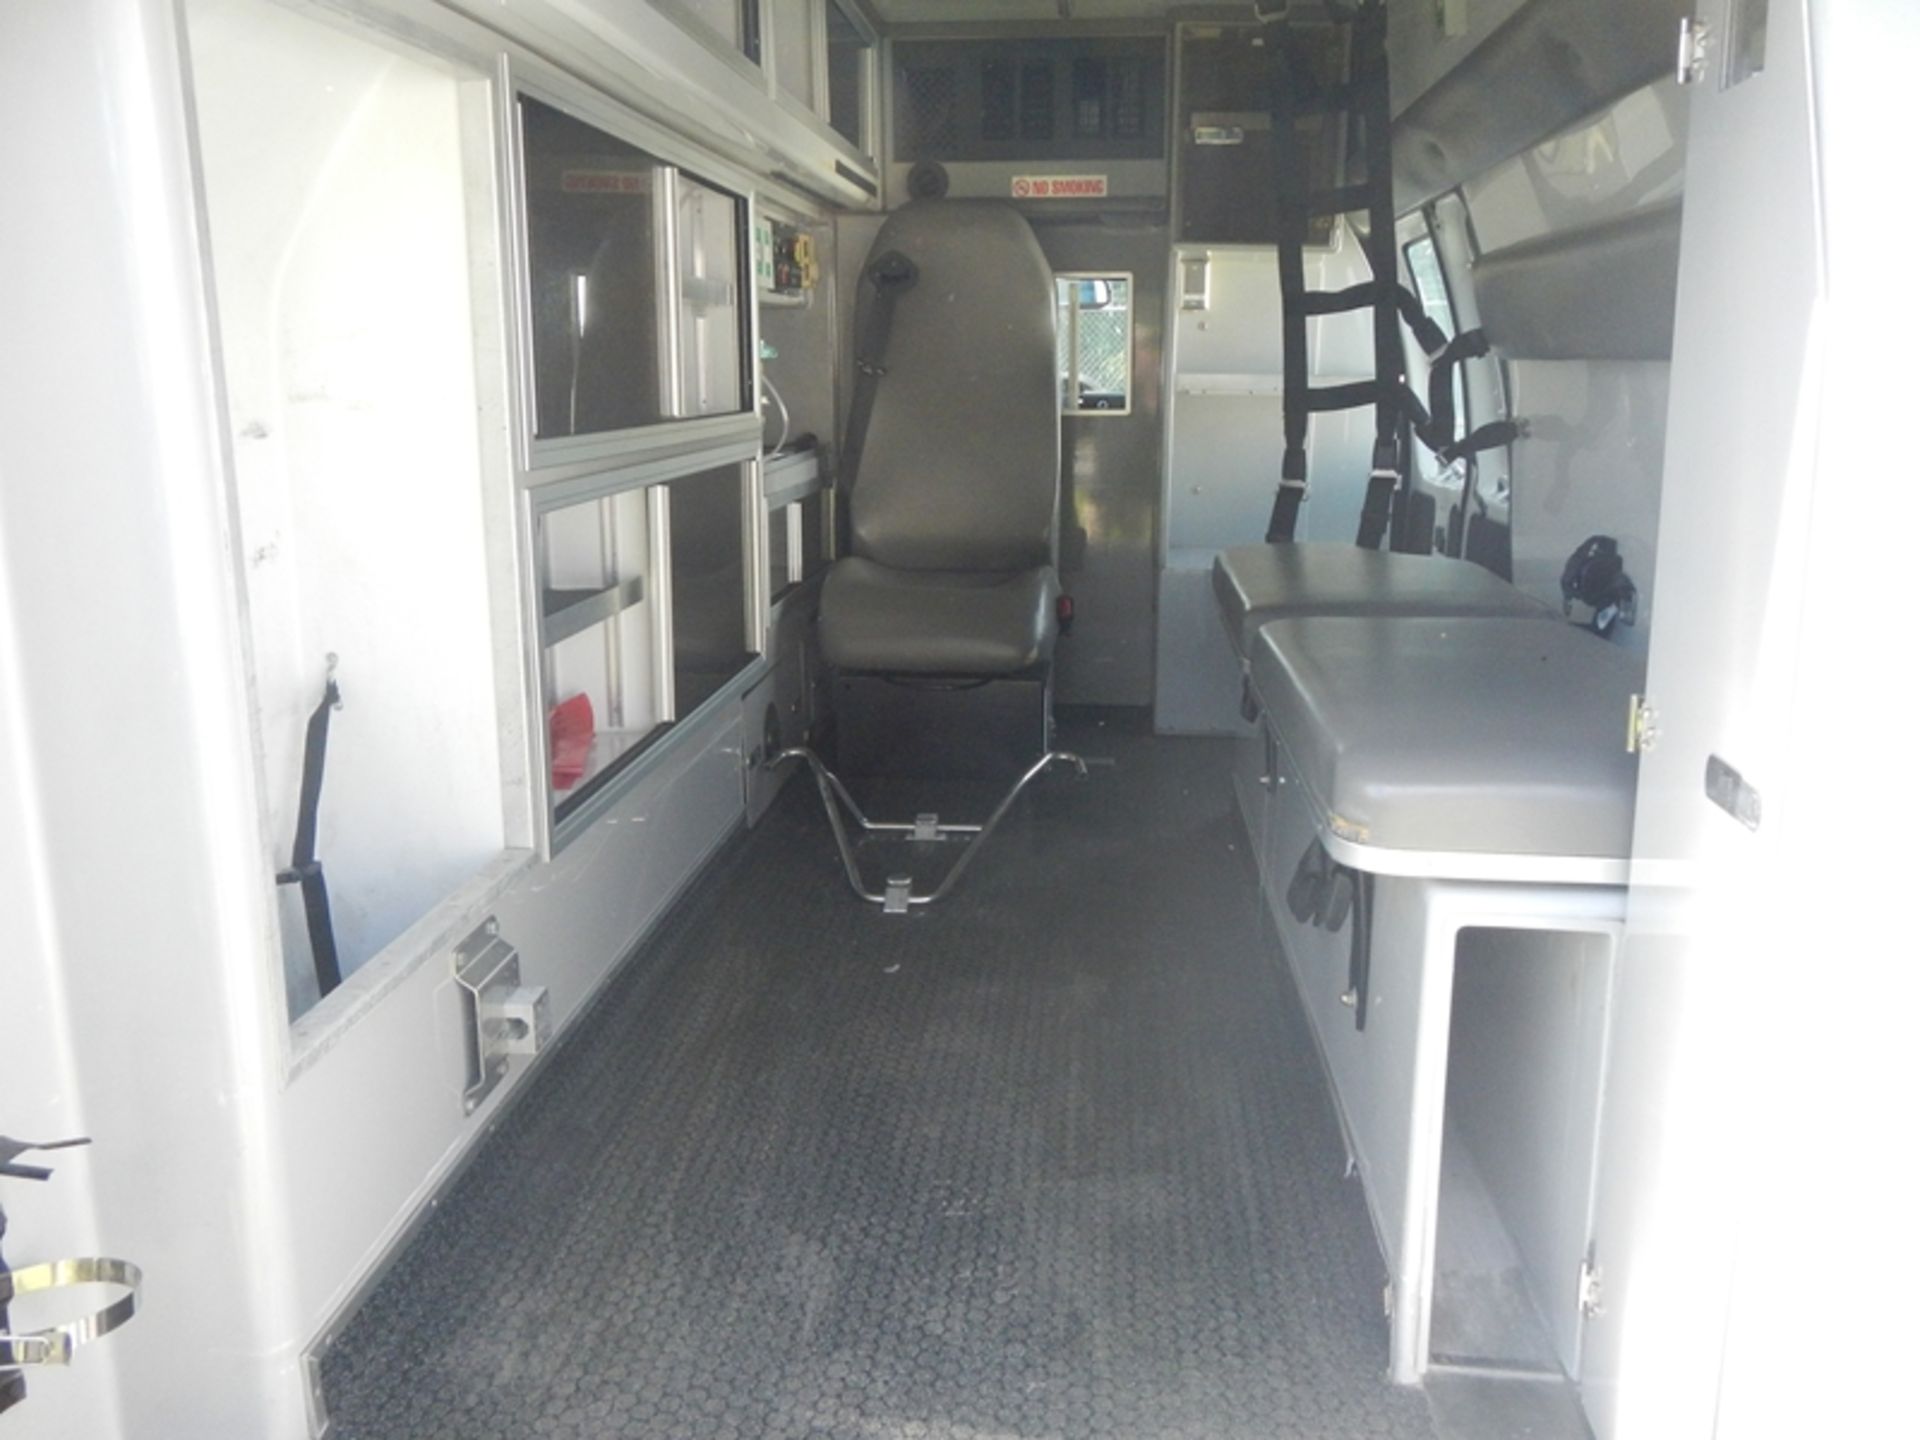 2010 FORD E-350 Super Duty Type II Ambulance, dsl 248,059 miles - VIN: 1FDSS3EP8ADA23977 - Image 6 of 6